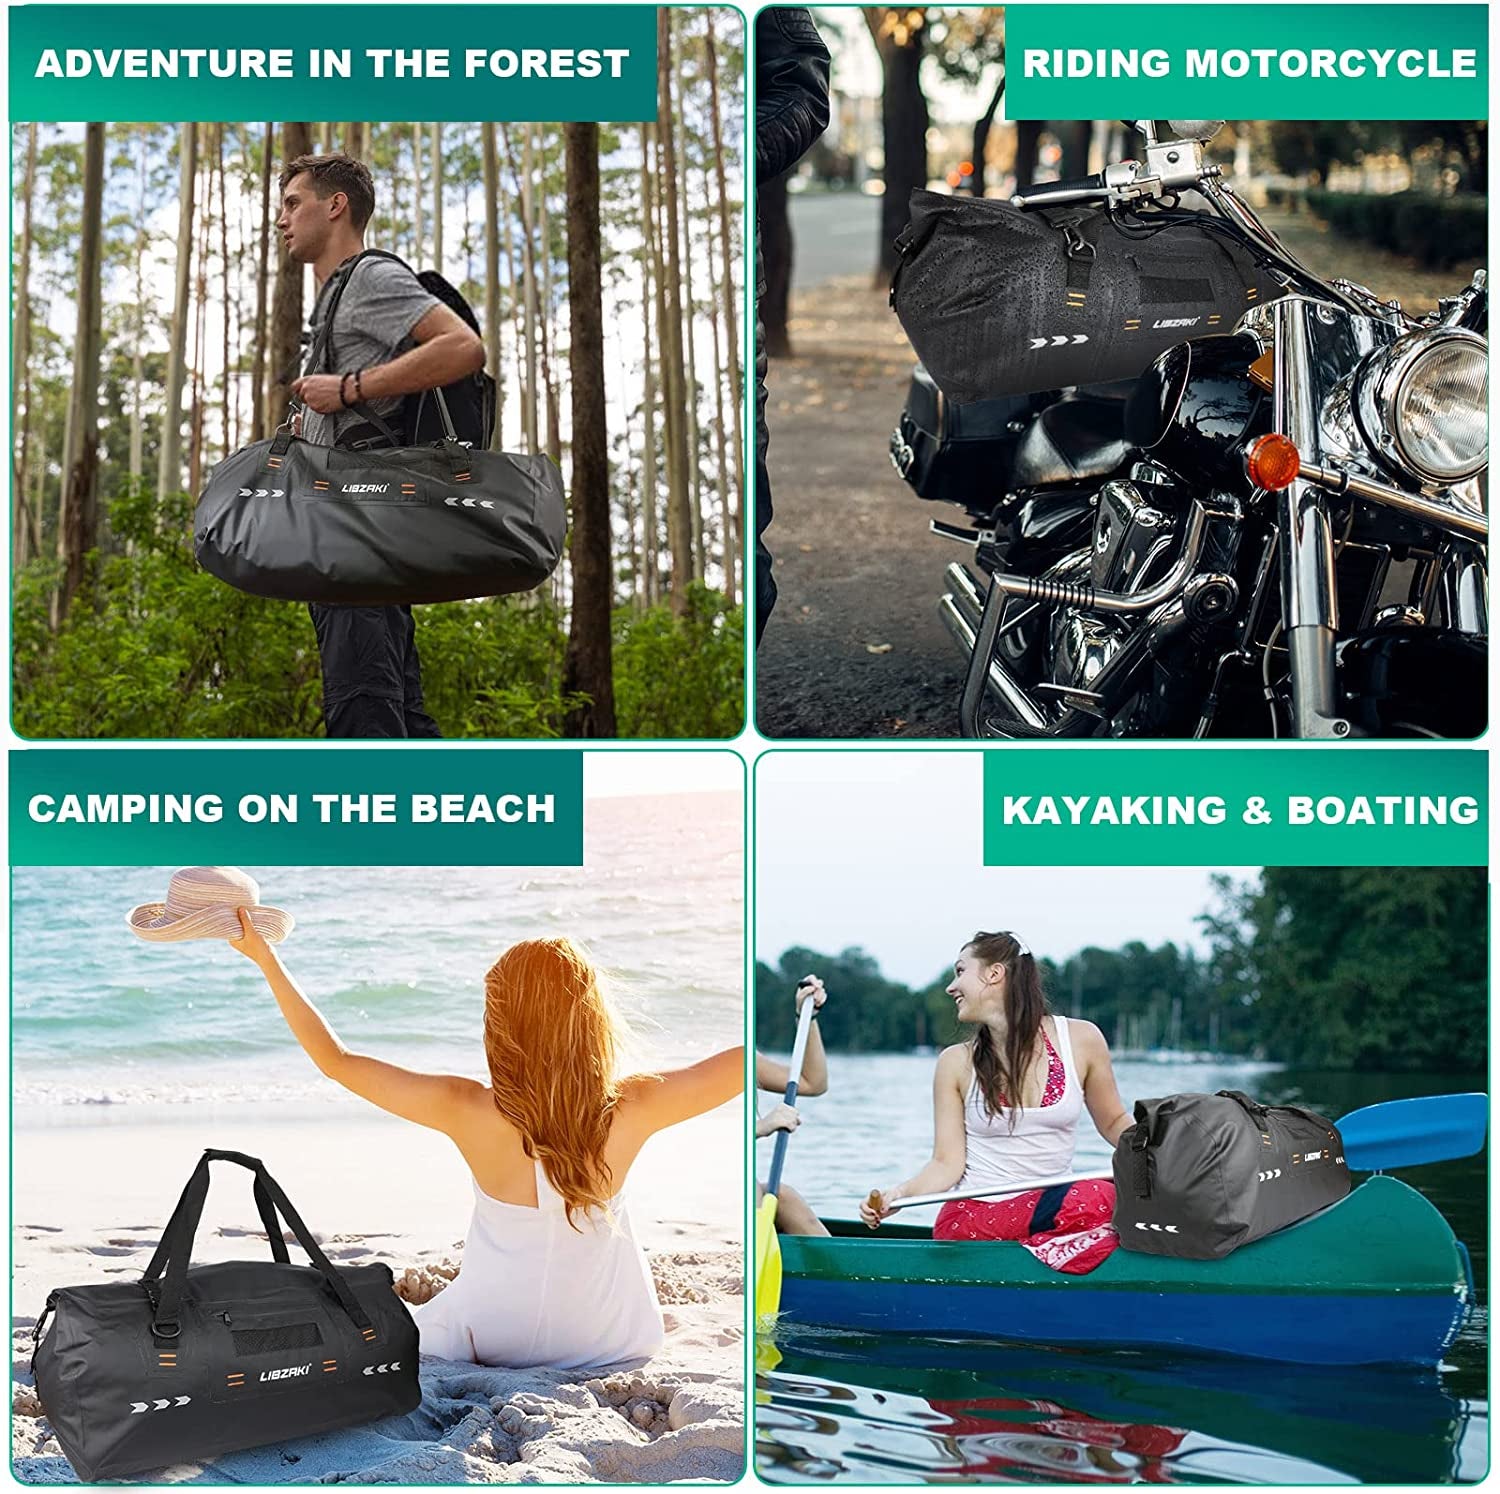 LIBZAKI Heavy Duty Waterproof Duffel Bag- Roll Top Duffel Keeps Gear Dry Any Kind of Travel, Camping, Beach, Snowboarding, Motorcycling, Hunting,Watersports , 50L&70L Sizes